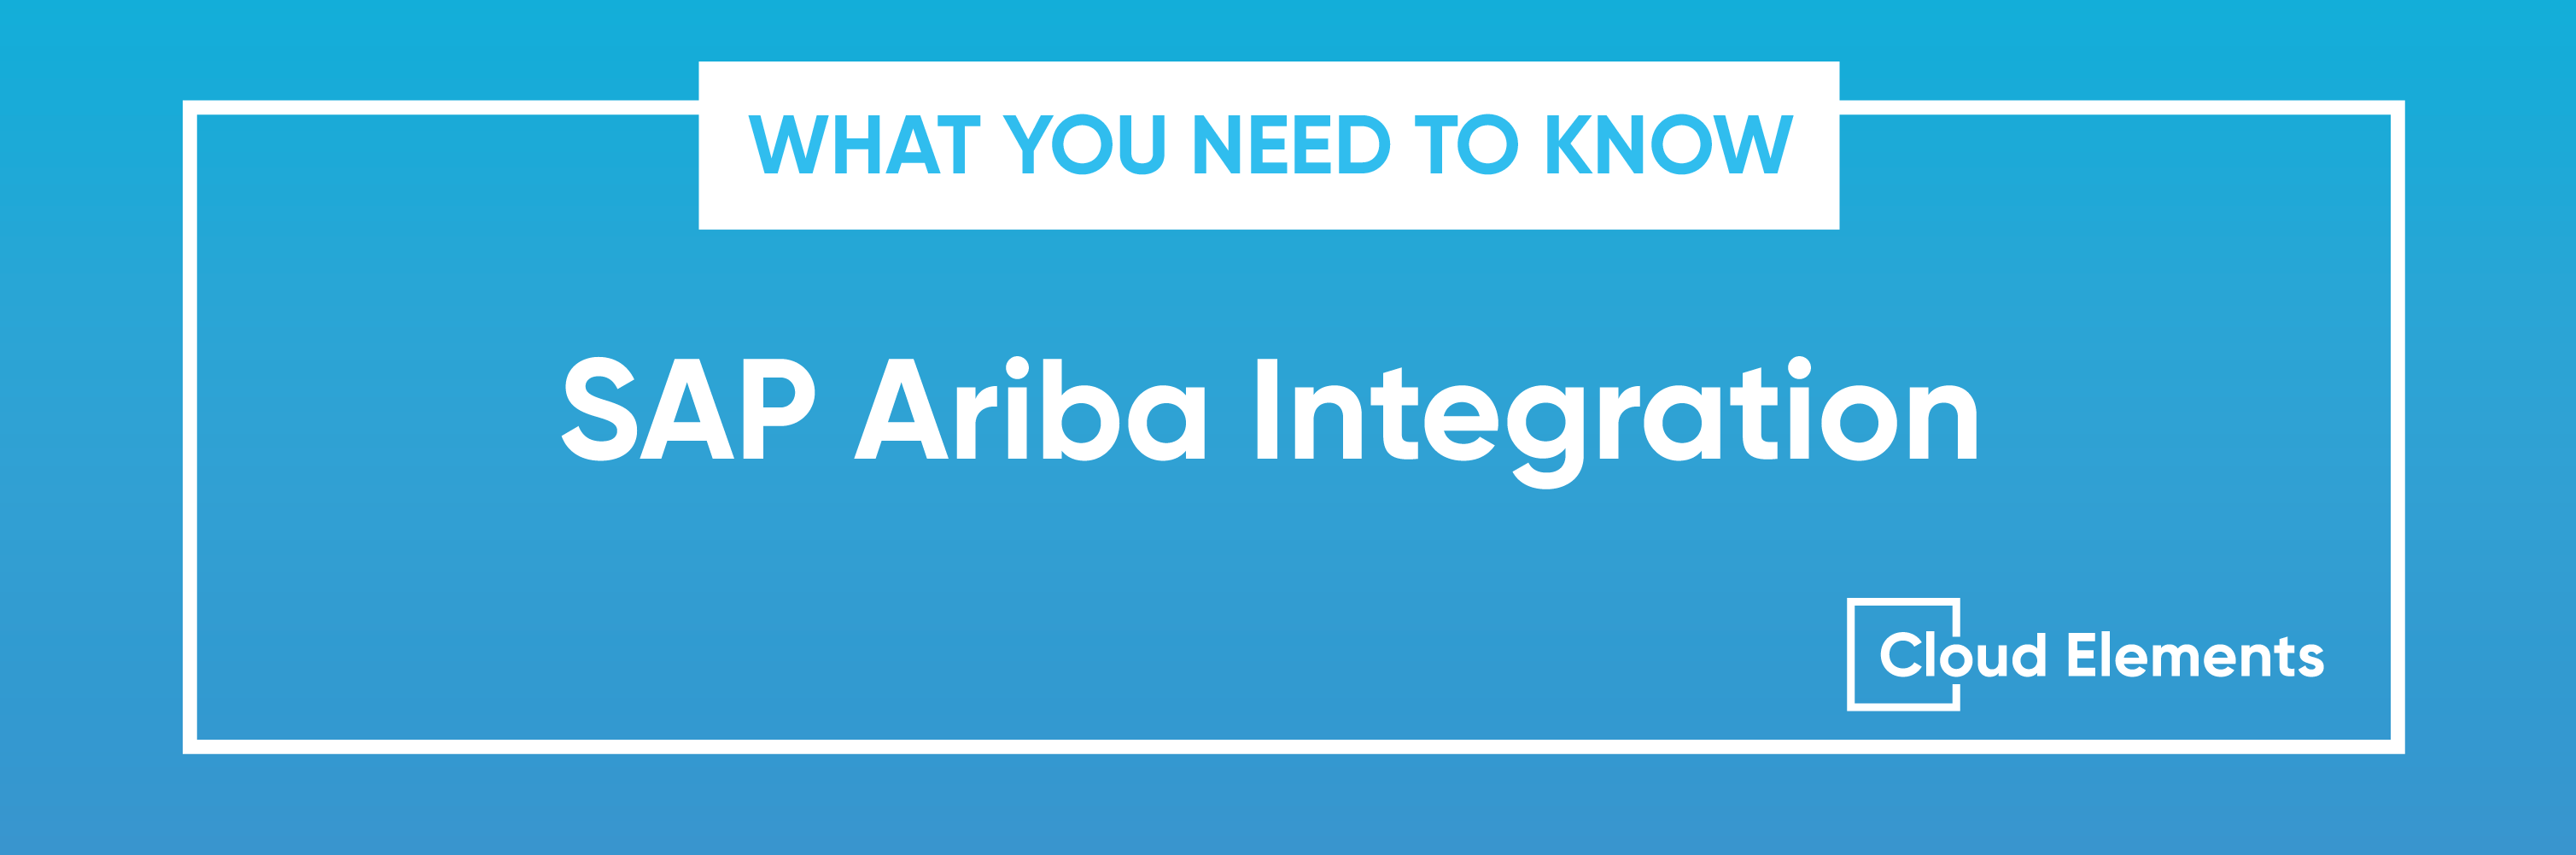 sap ariba integration